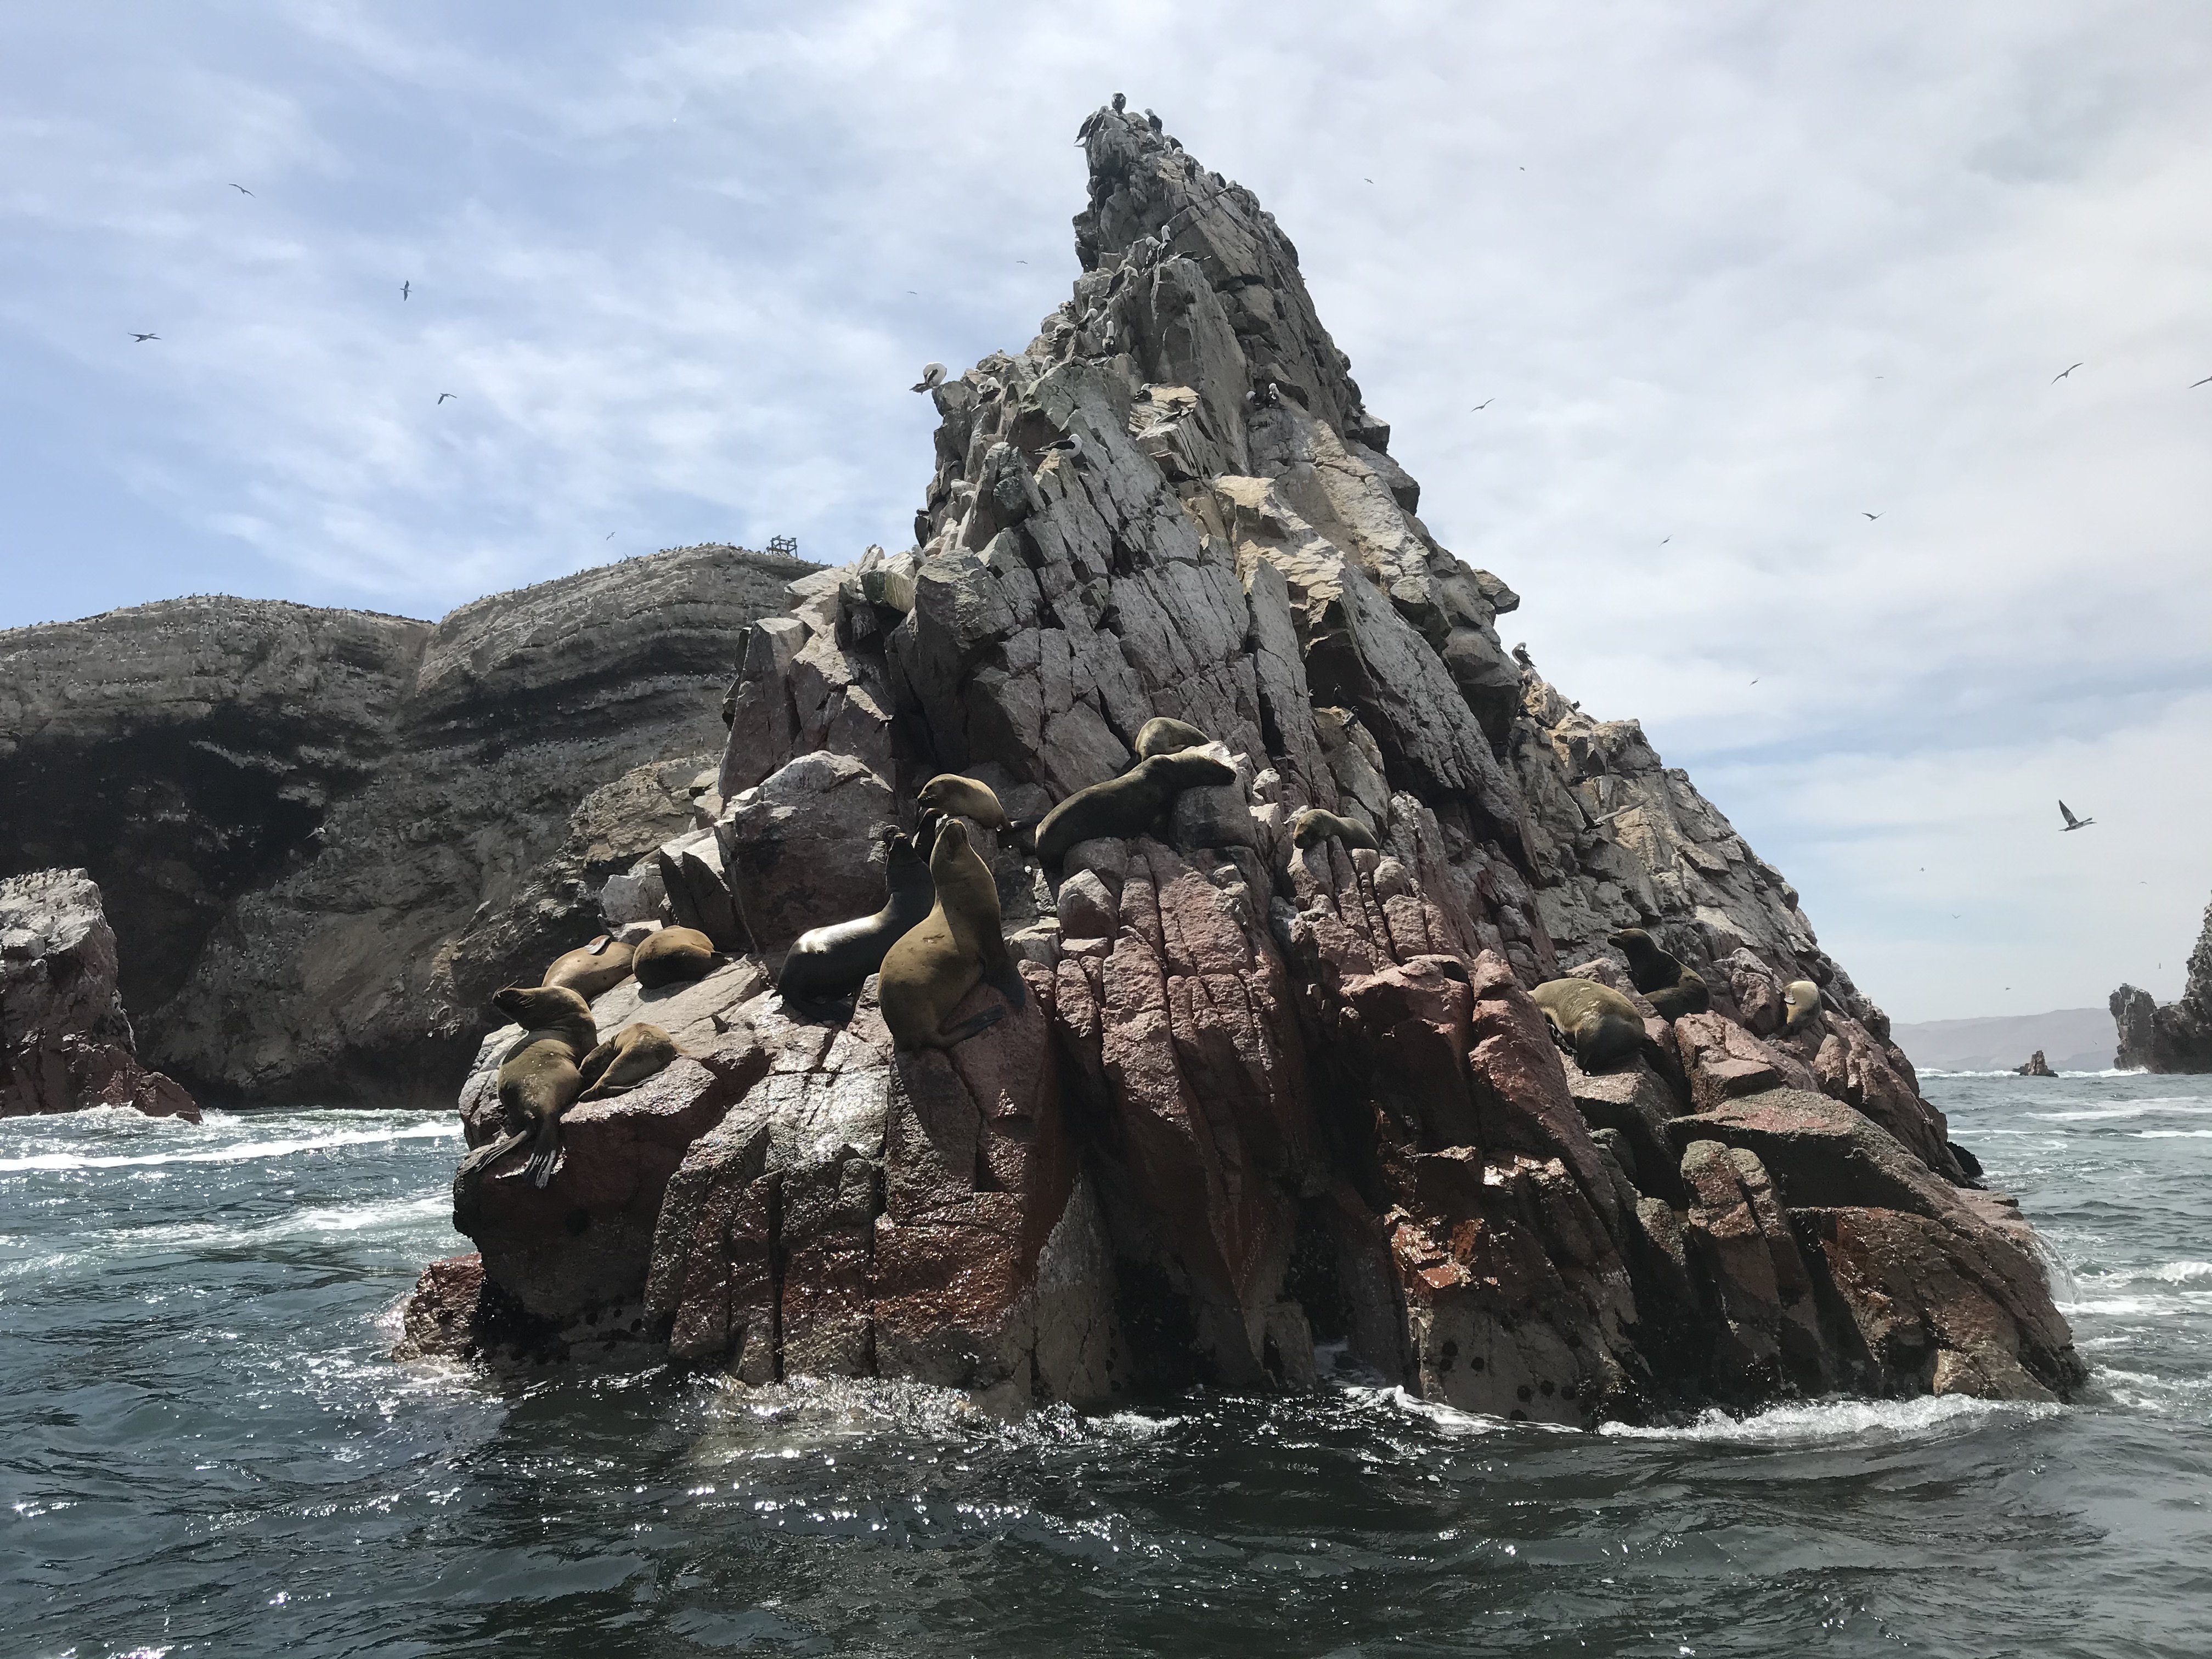 Sea lions on a rock at the Islas Ballestas